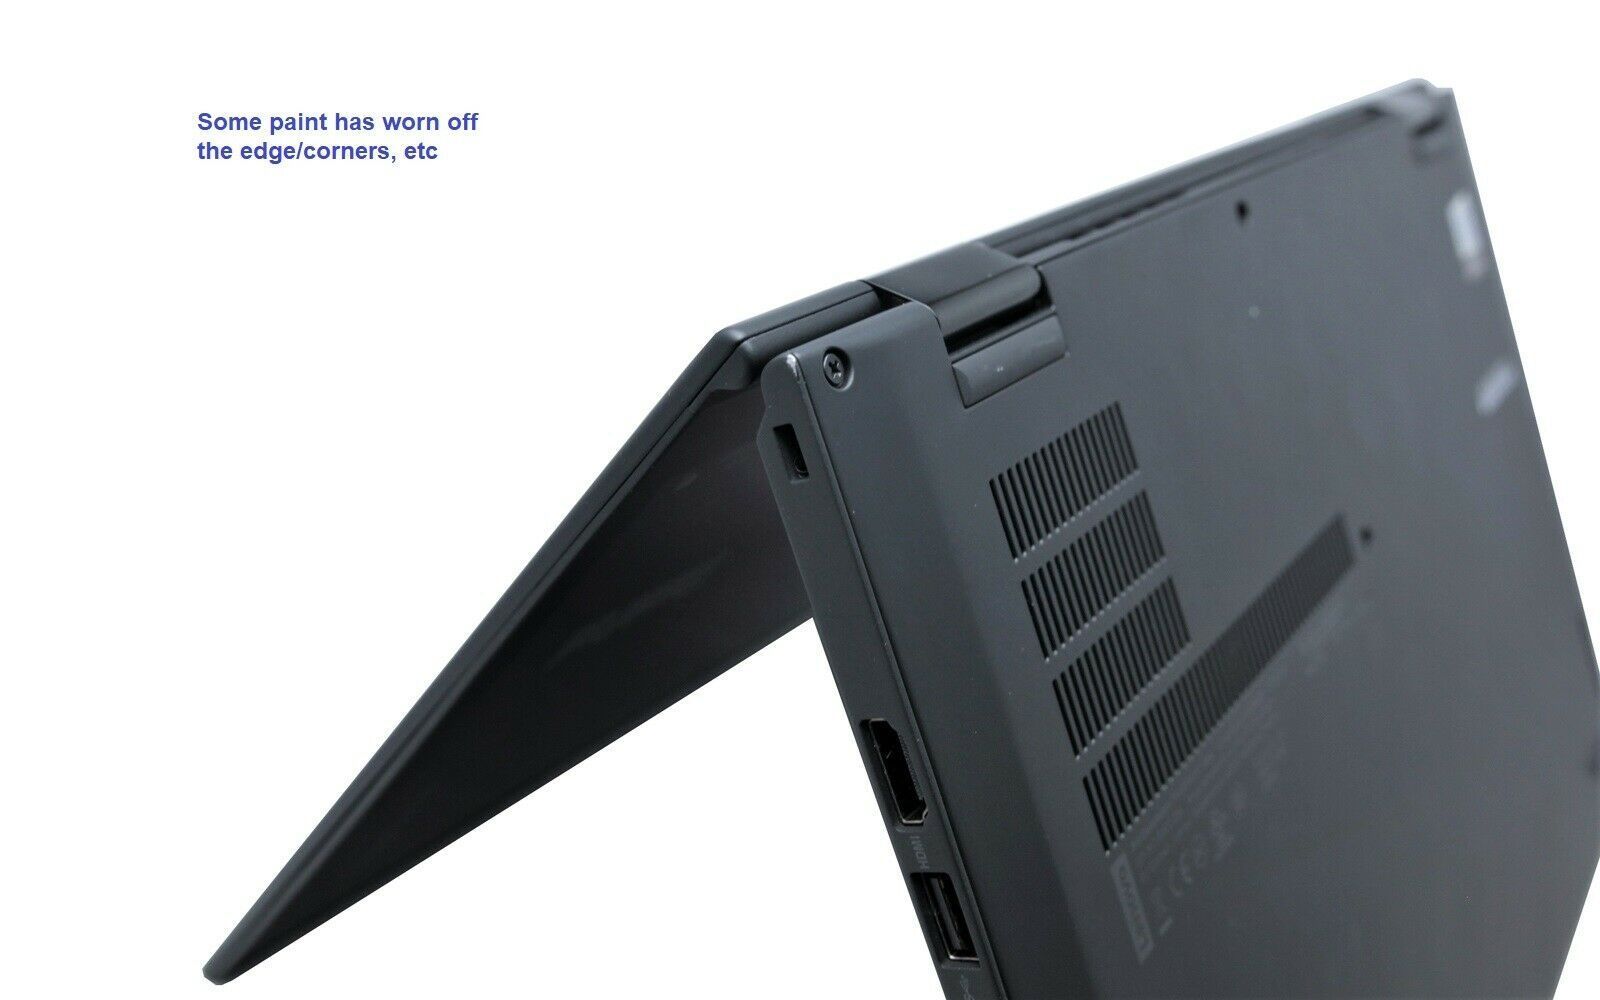 Lenovo Thinkpad X1 Yoga 3rd Gen UltraBook: 256GB, 16GB RAM, Core i5-8350U, Warranty - CruiseTech